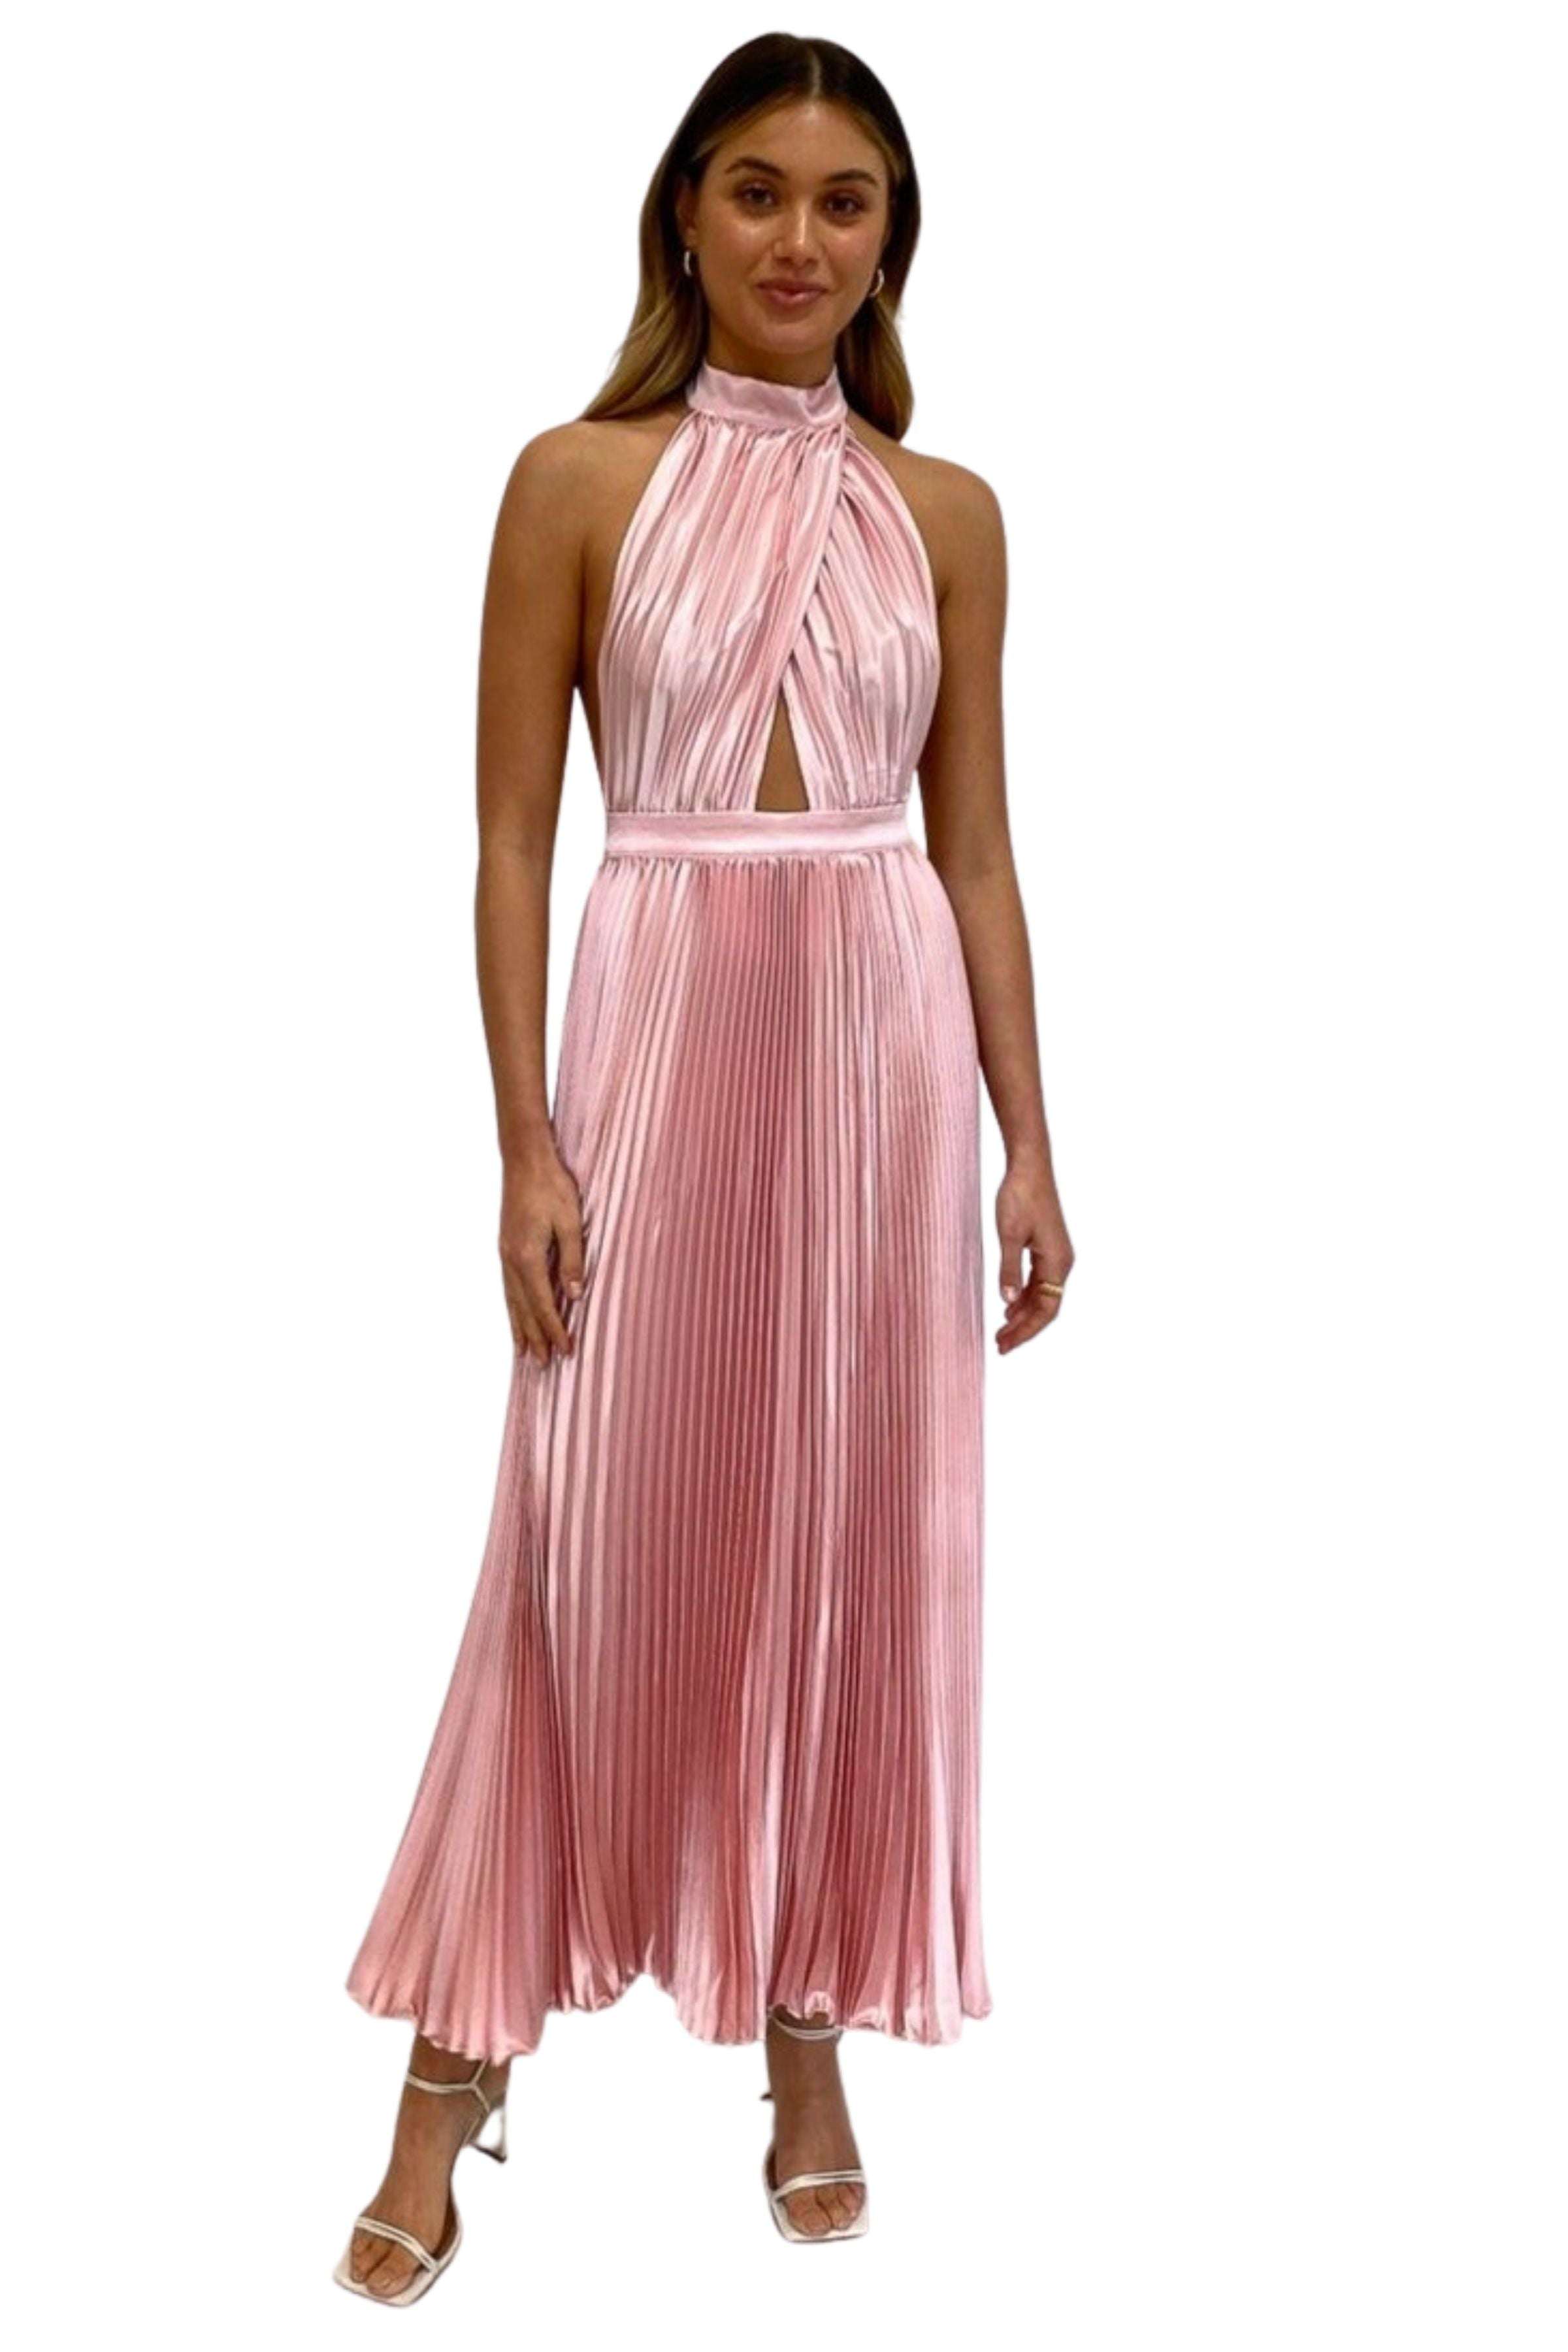 L'Idee L'IDEE Renaissance Gown (Ballet) - RRP $349 - lidee-renaissance-gown-ballet---rrp-9-dress-for-a-night-30754768.jpg